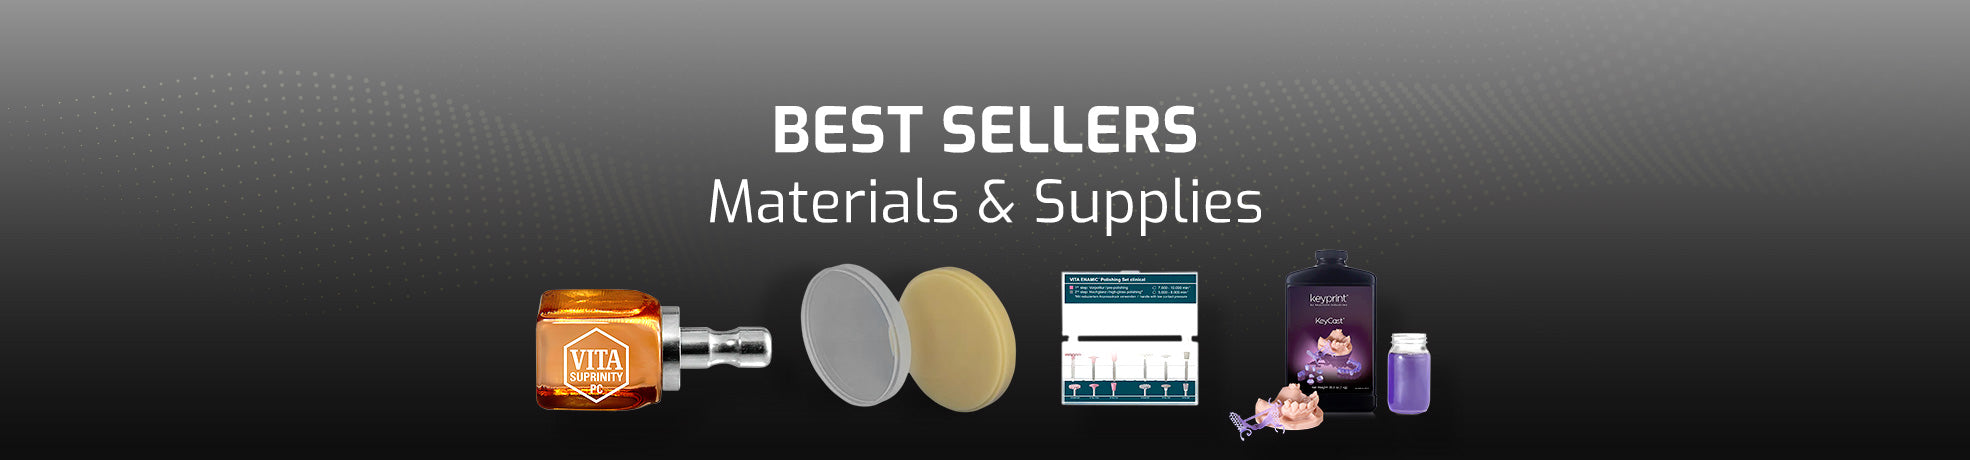 Best Sellers - Materials & Supplies